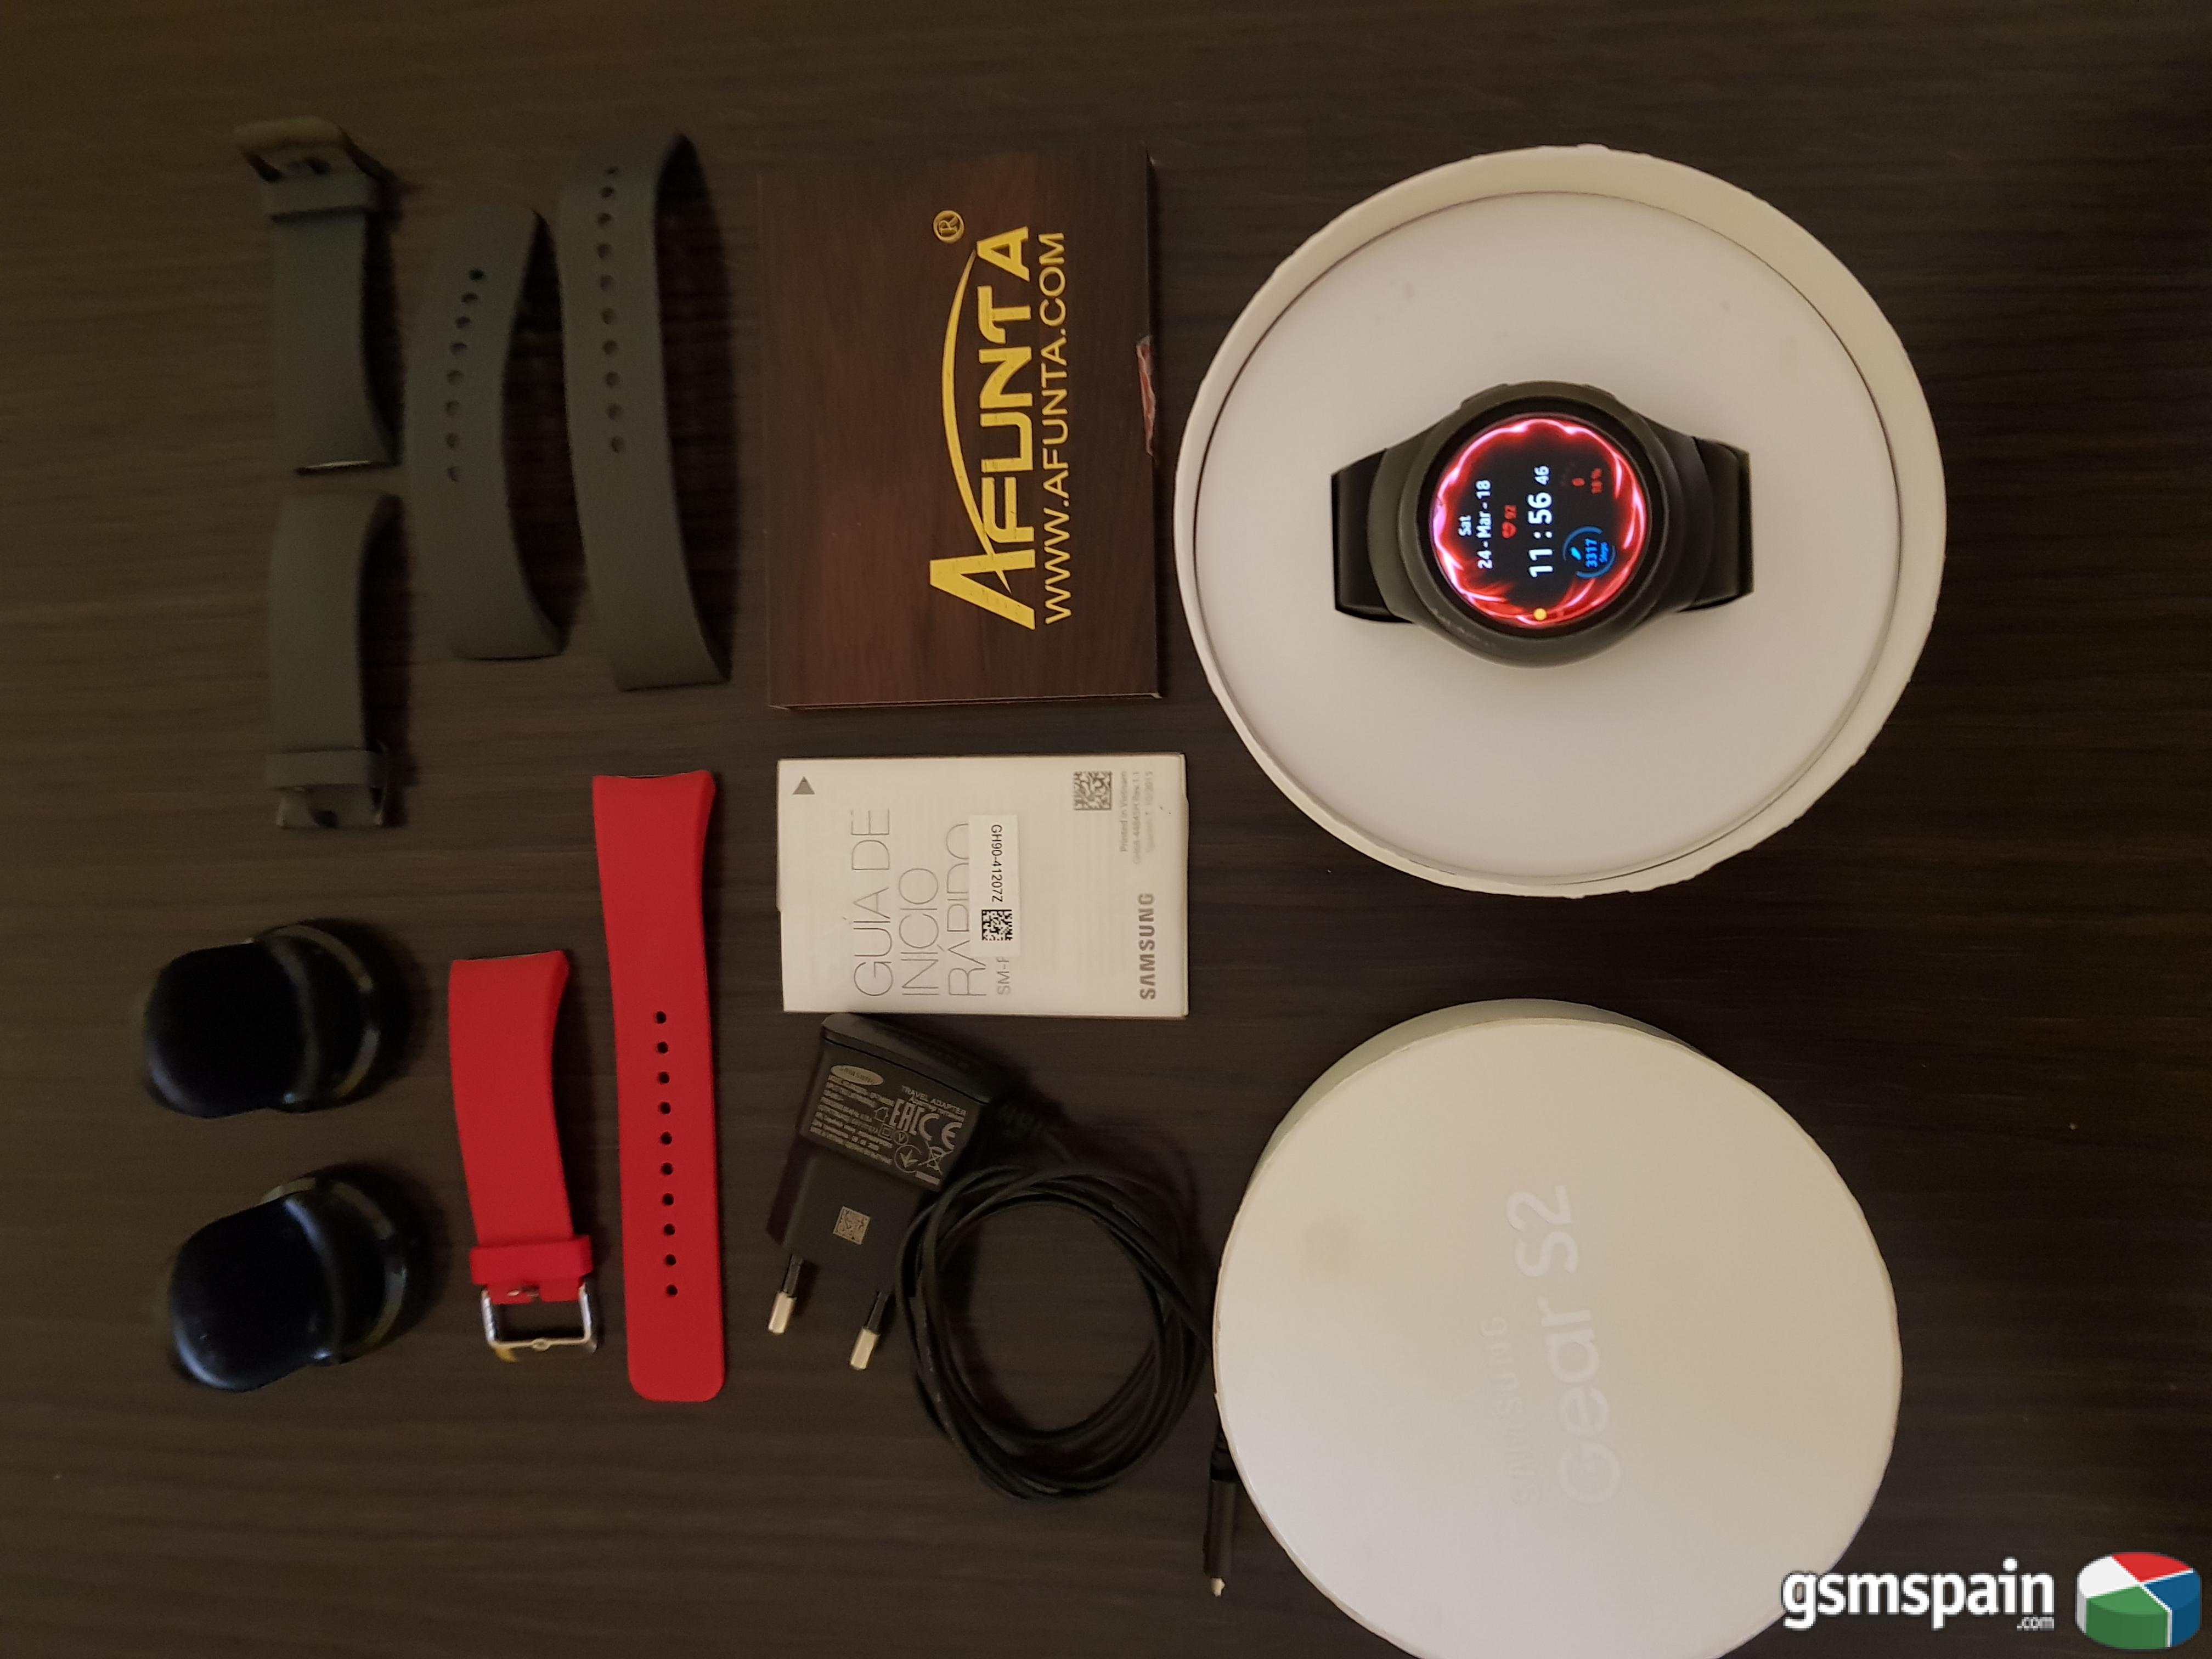 [VENDO] Smartwatch samsung gear s2